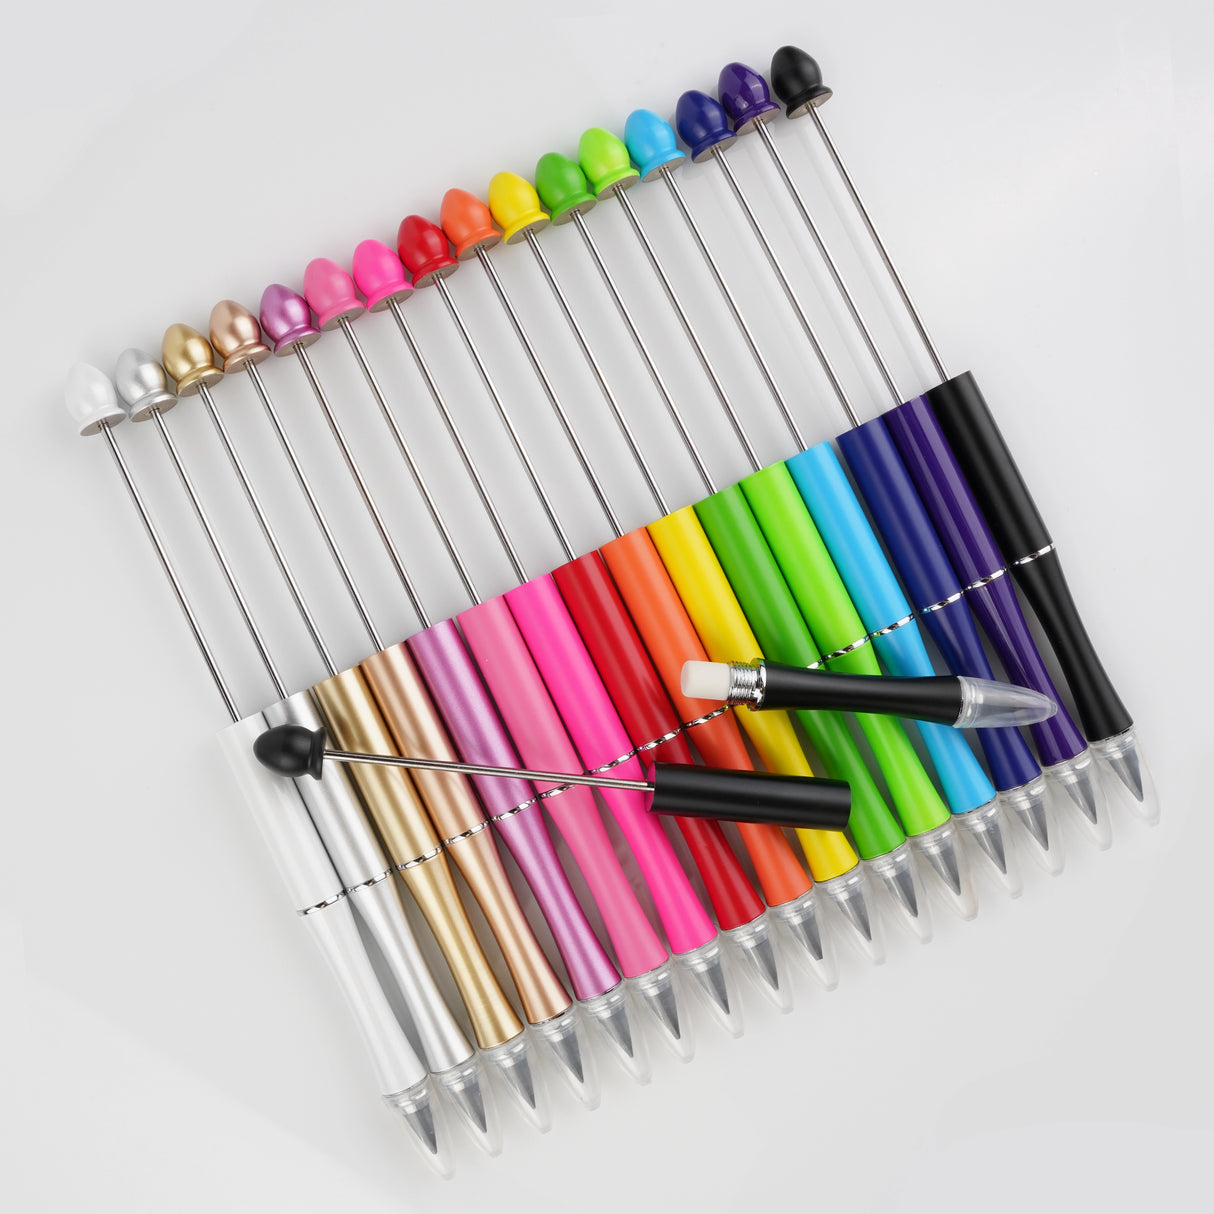 Pencil Bead-Able Everlasting Tip - Metallic Pink